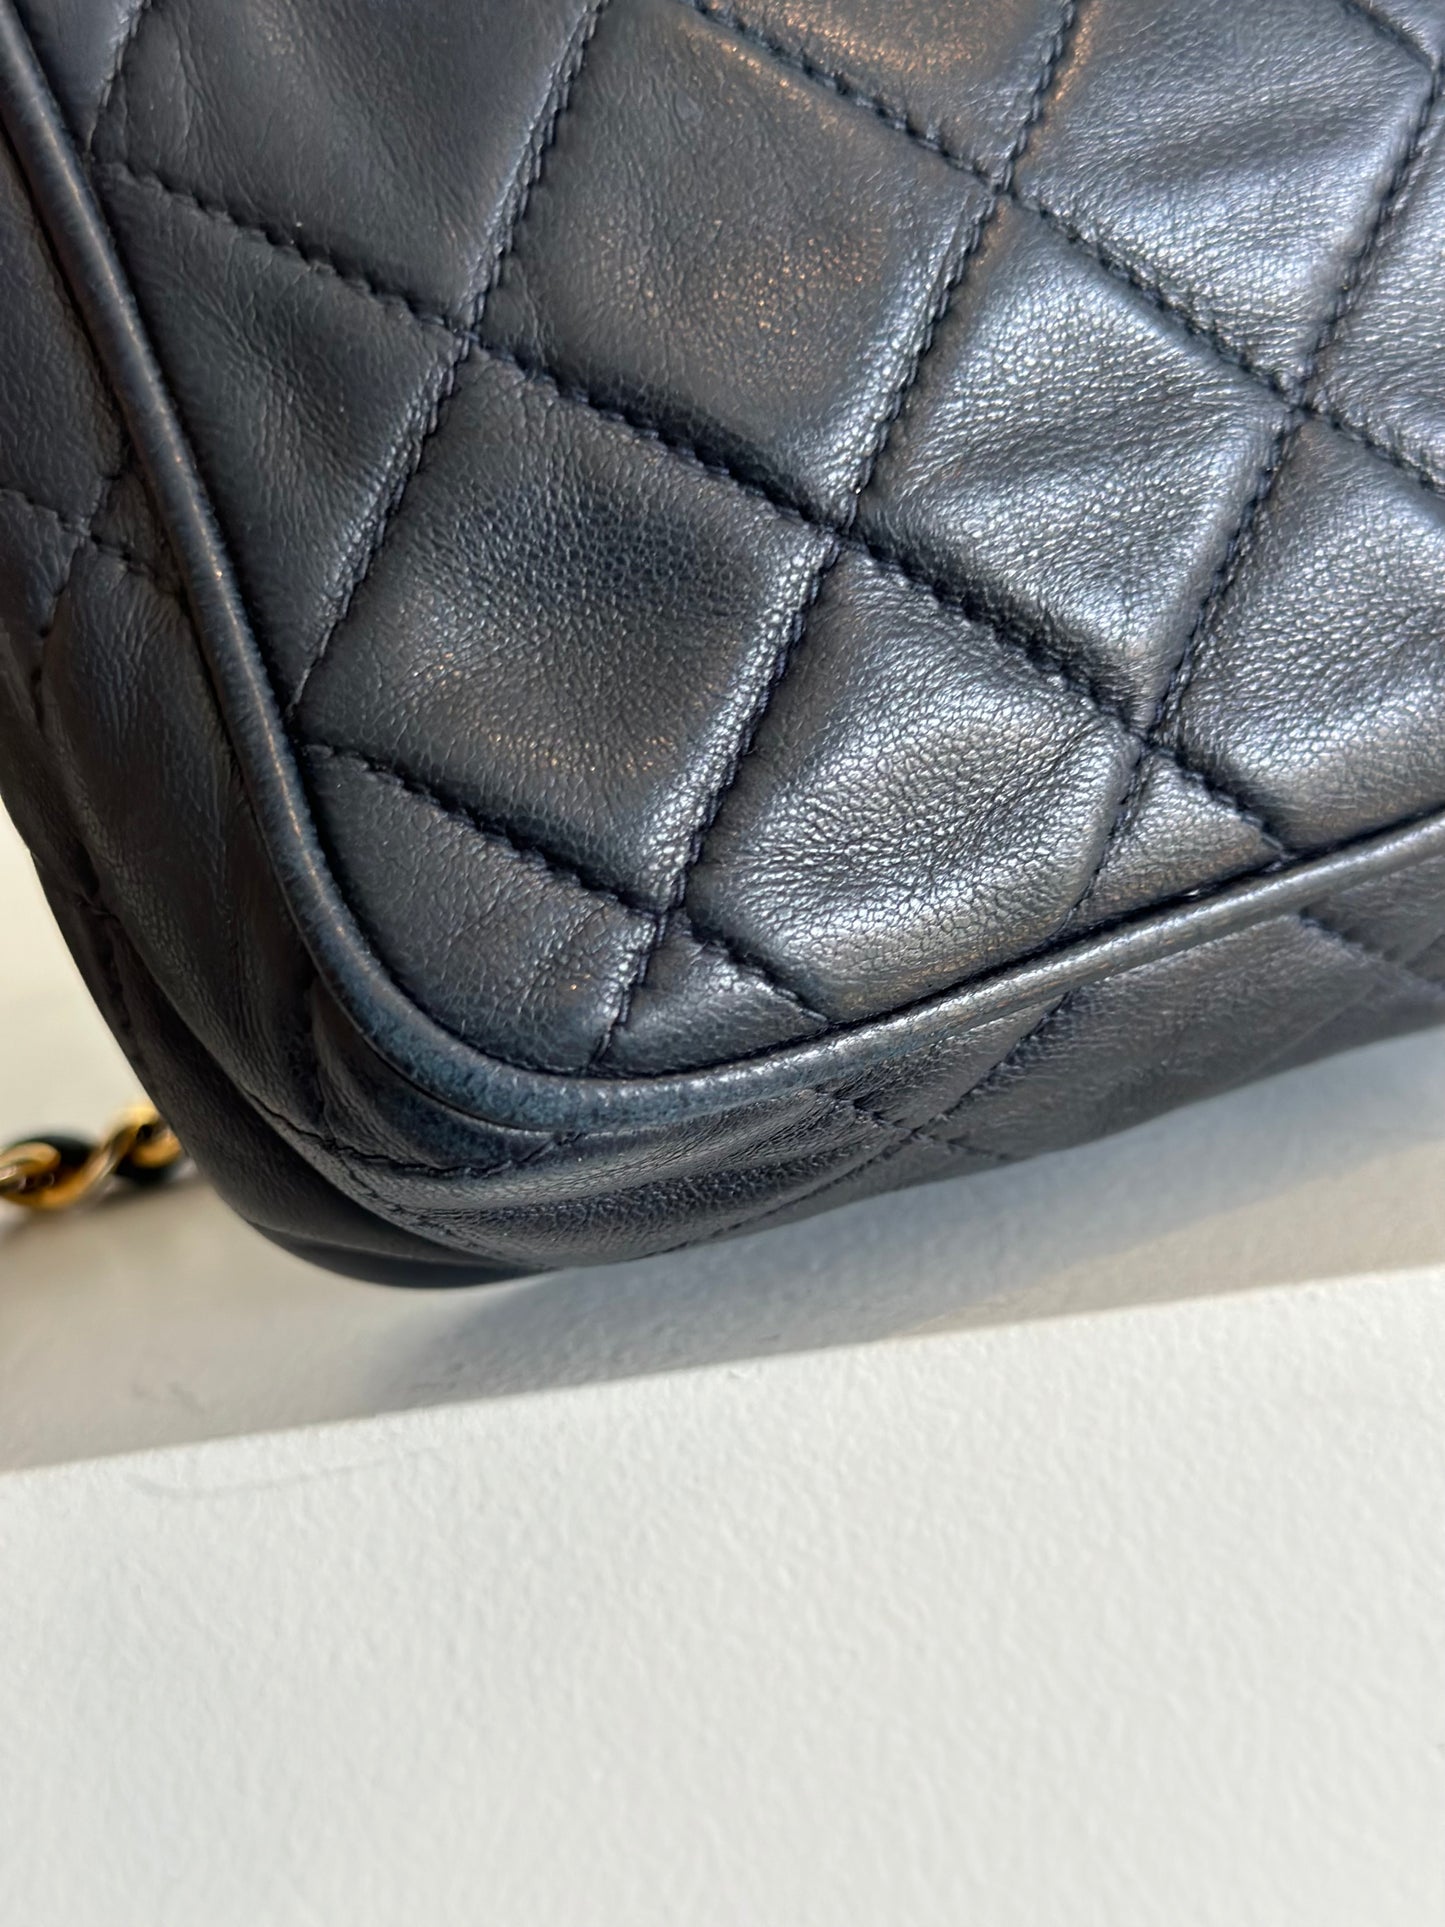 Chanel vintage camera bag with tassel, navy blue leather